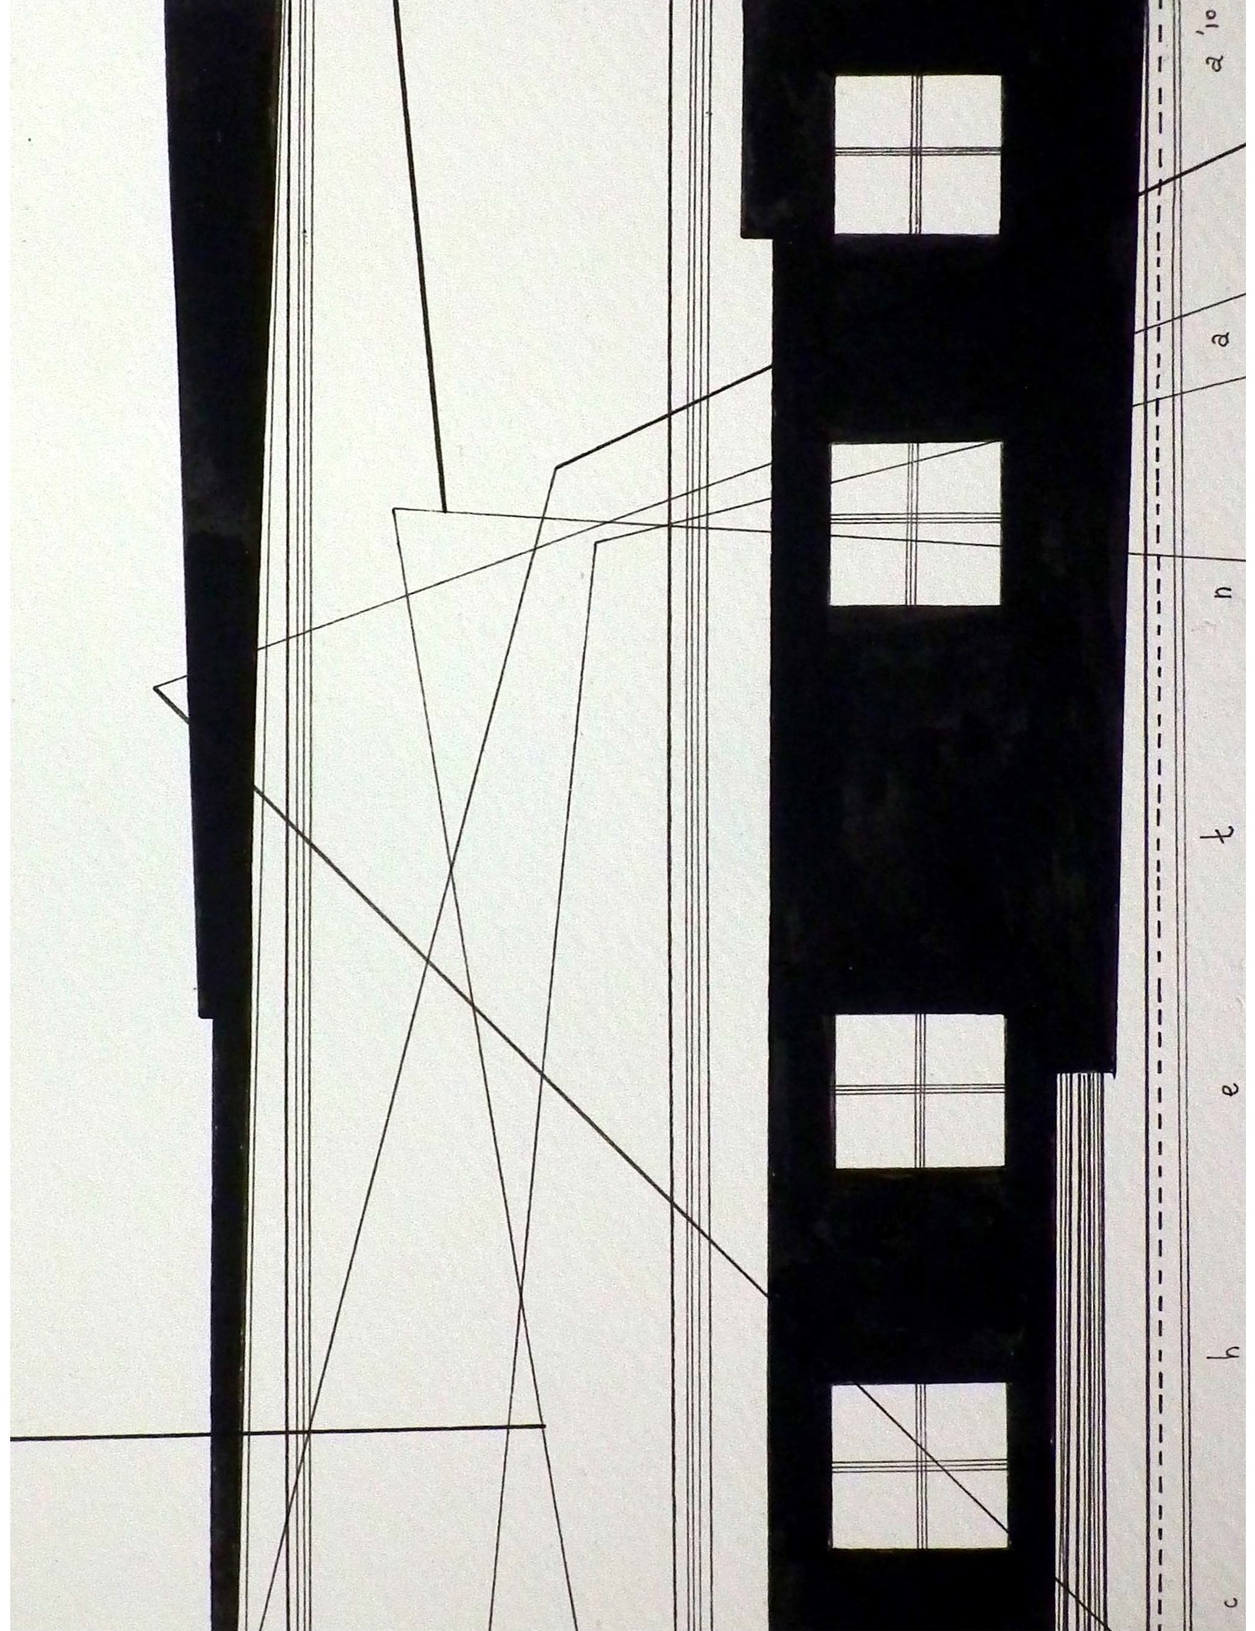  Lines in my way, Pen & ink on paper, 6"x8", 2010